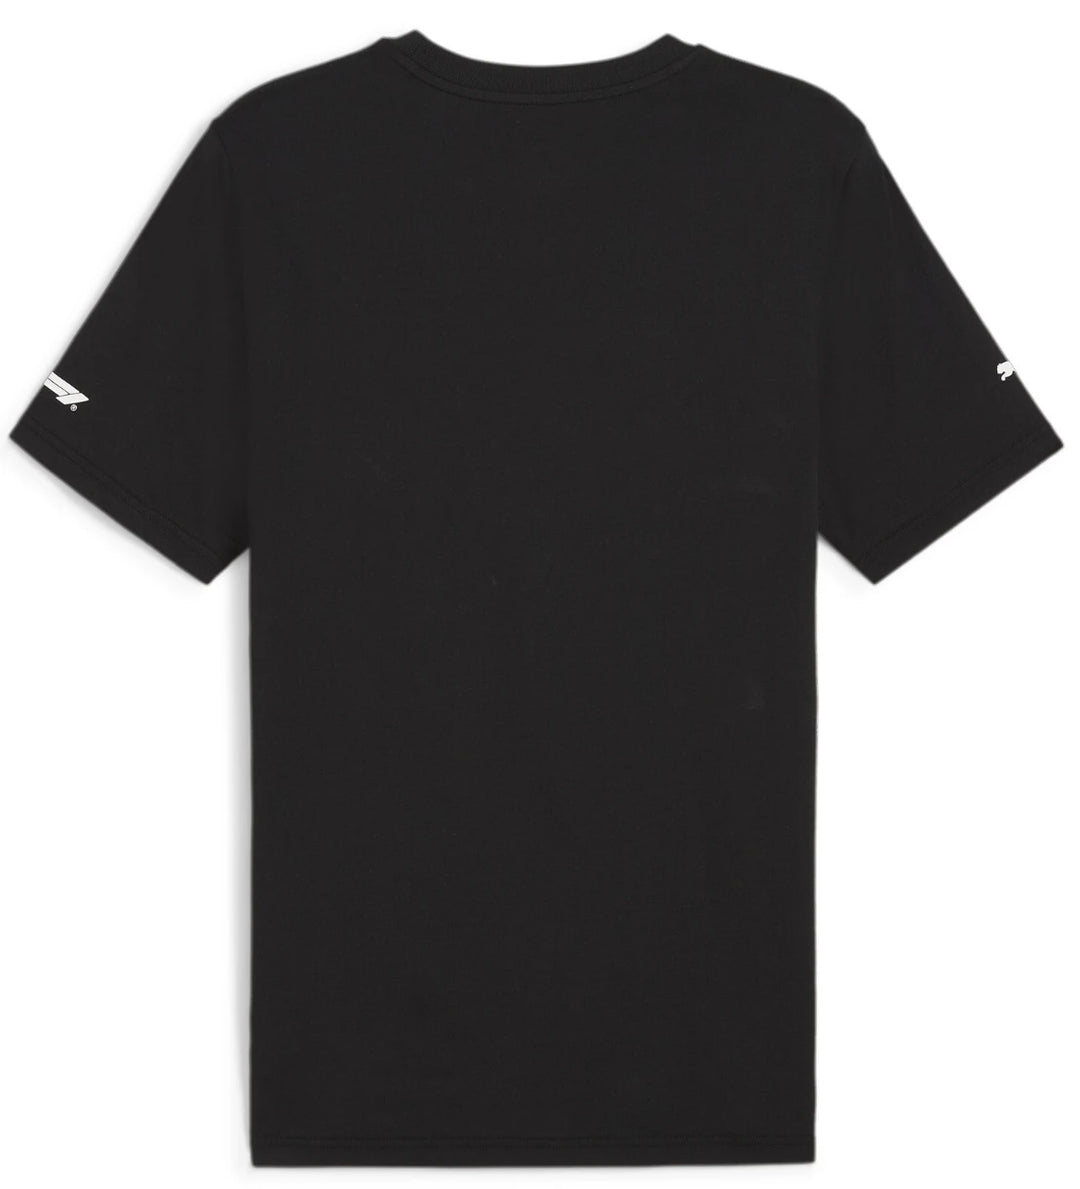 PUMA x Formula 1® Logo Graphic Carbon Effect Men's T-Shirt - Black